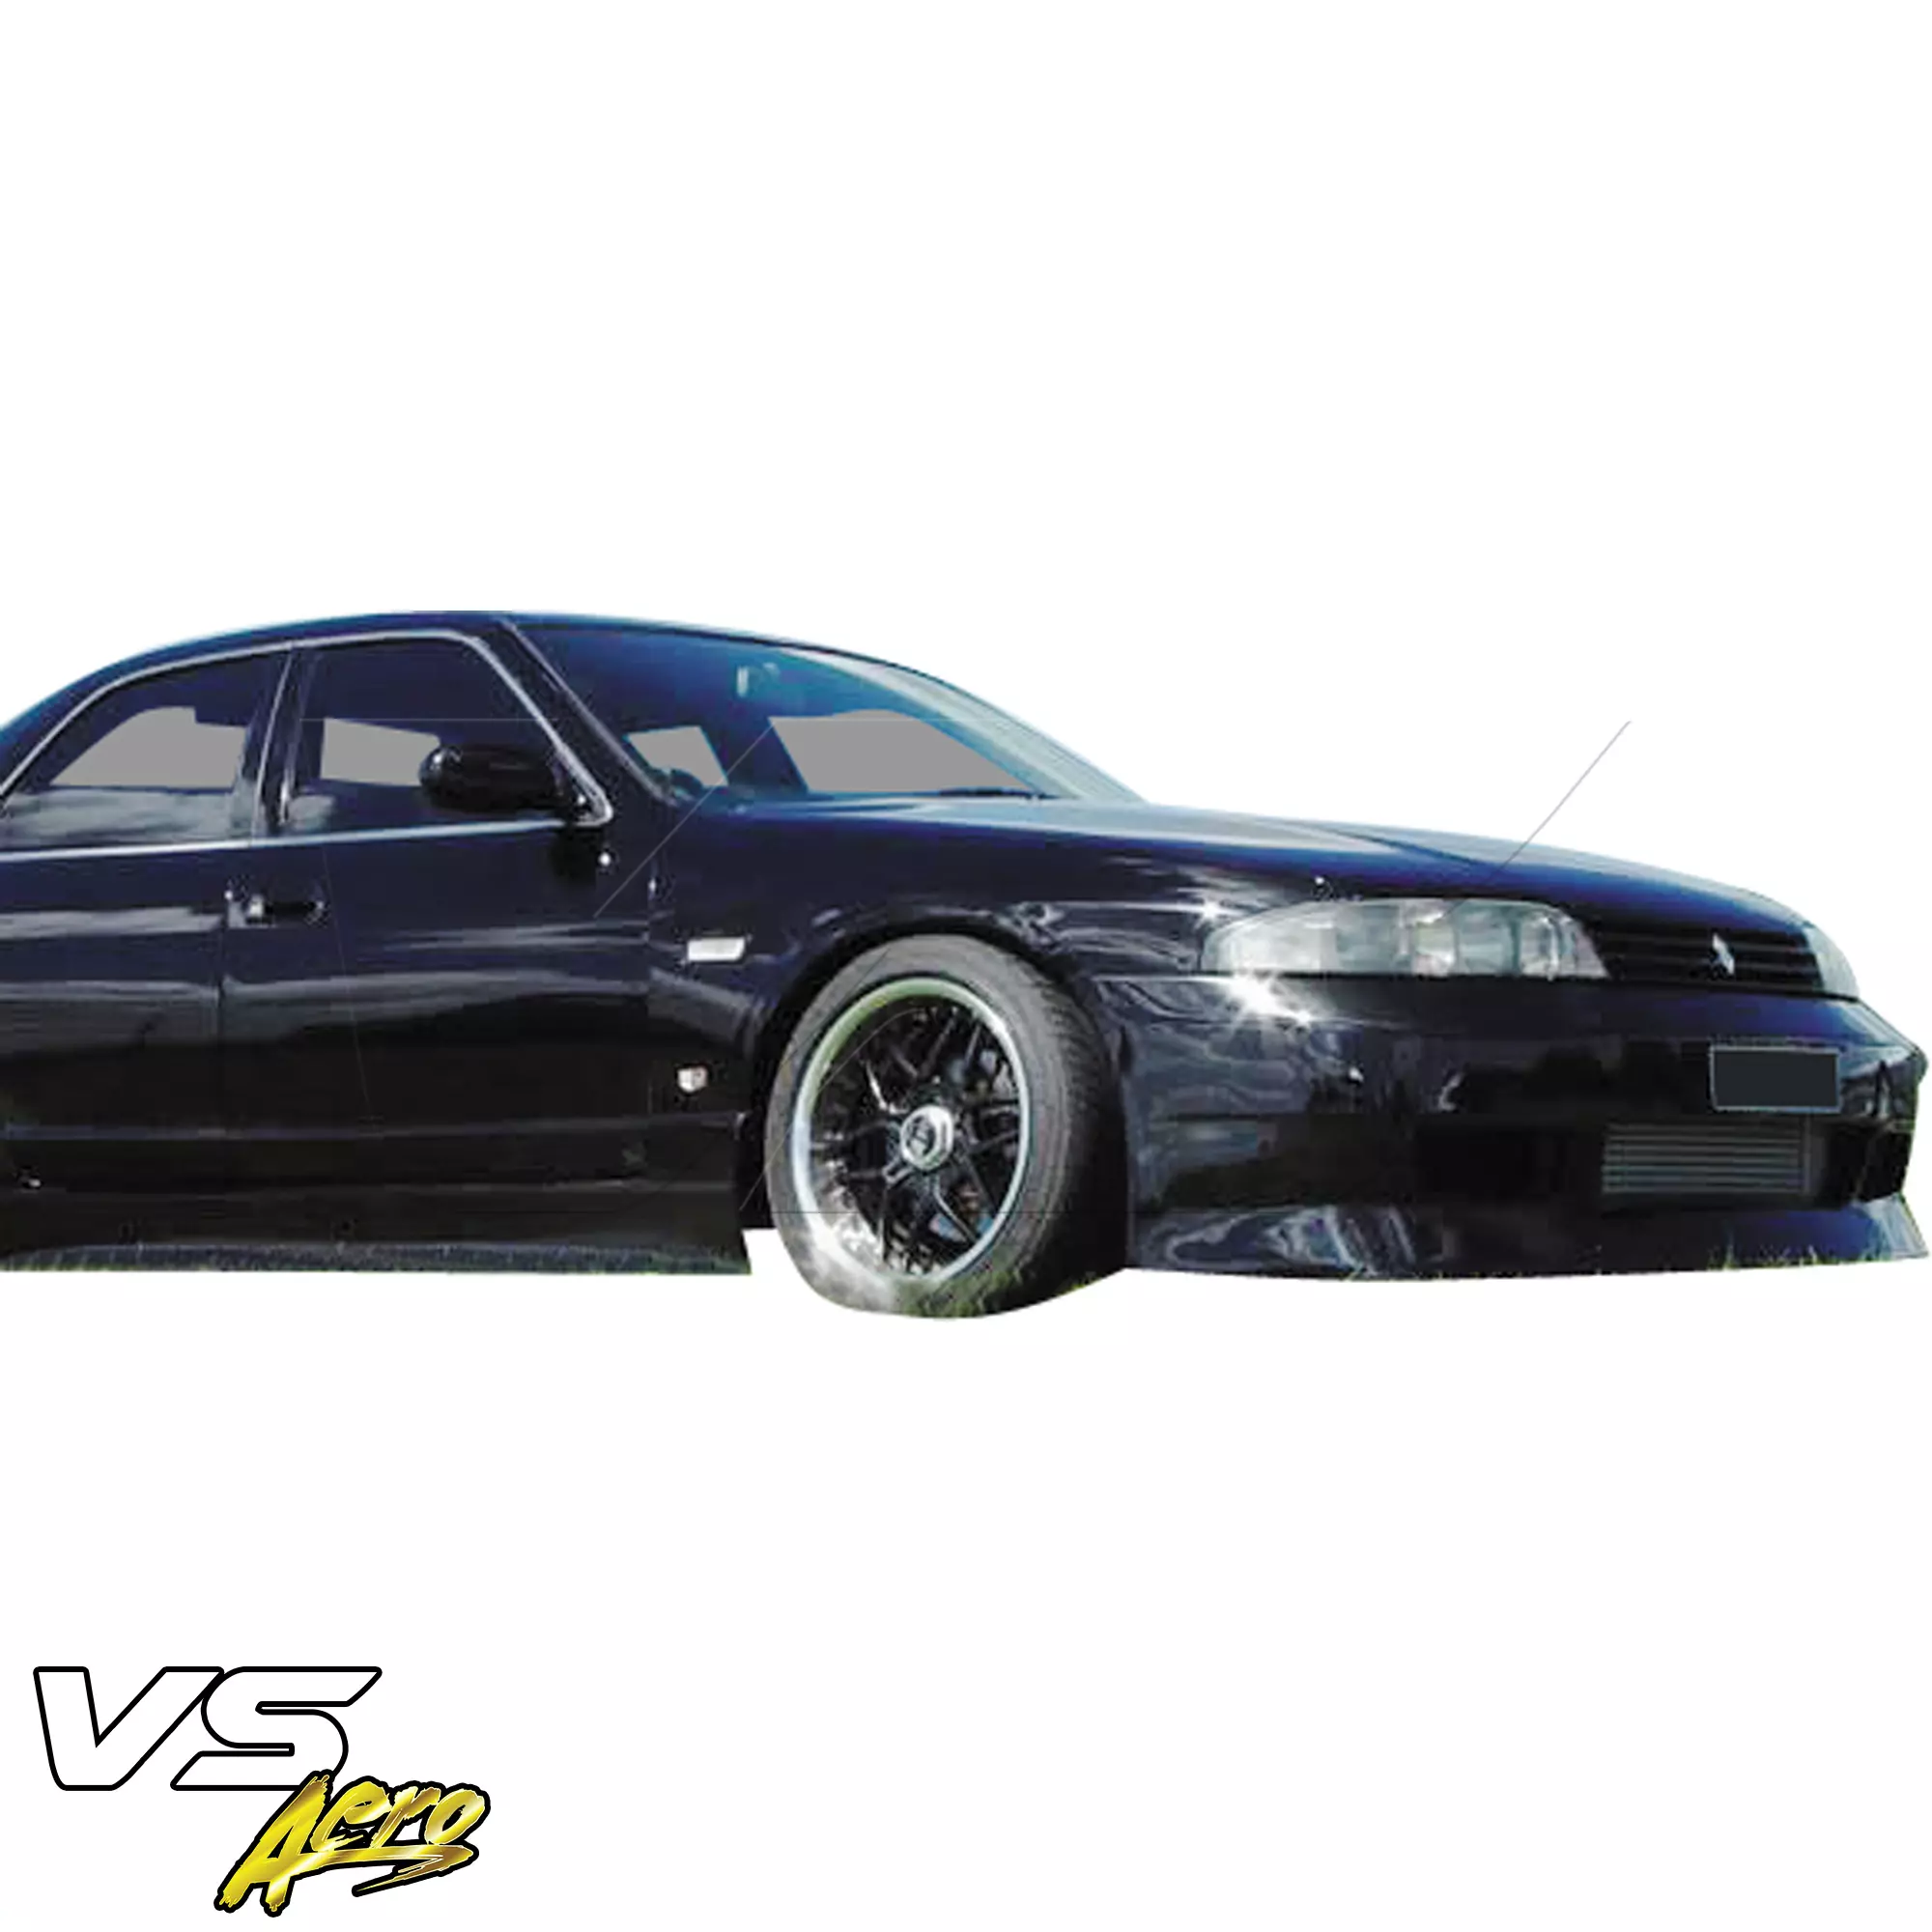 VSaero FRP FKON Body Kit 4pc > Nissan Skyline R33 GTS 1995-1998 > 2dr Coupe - Image 13